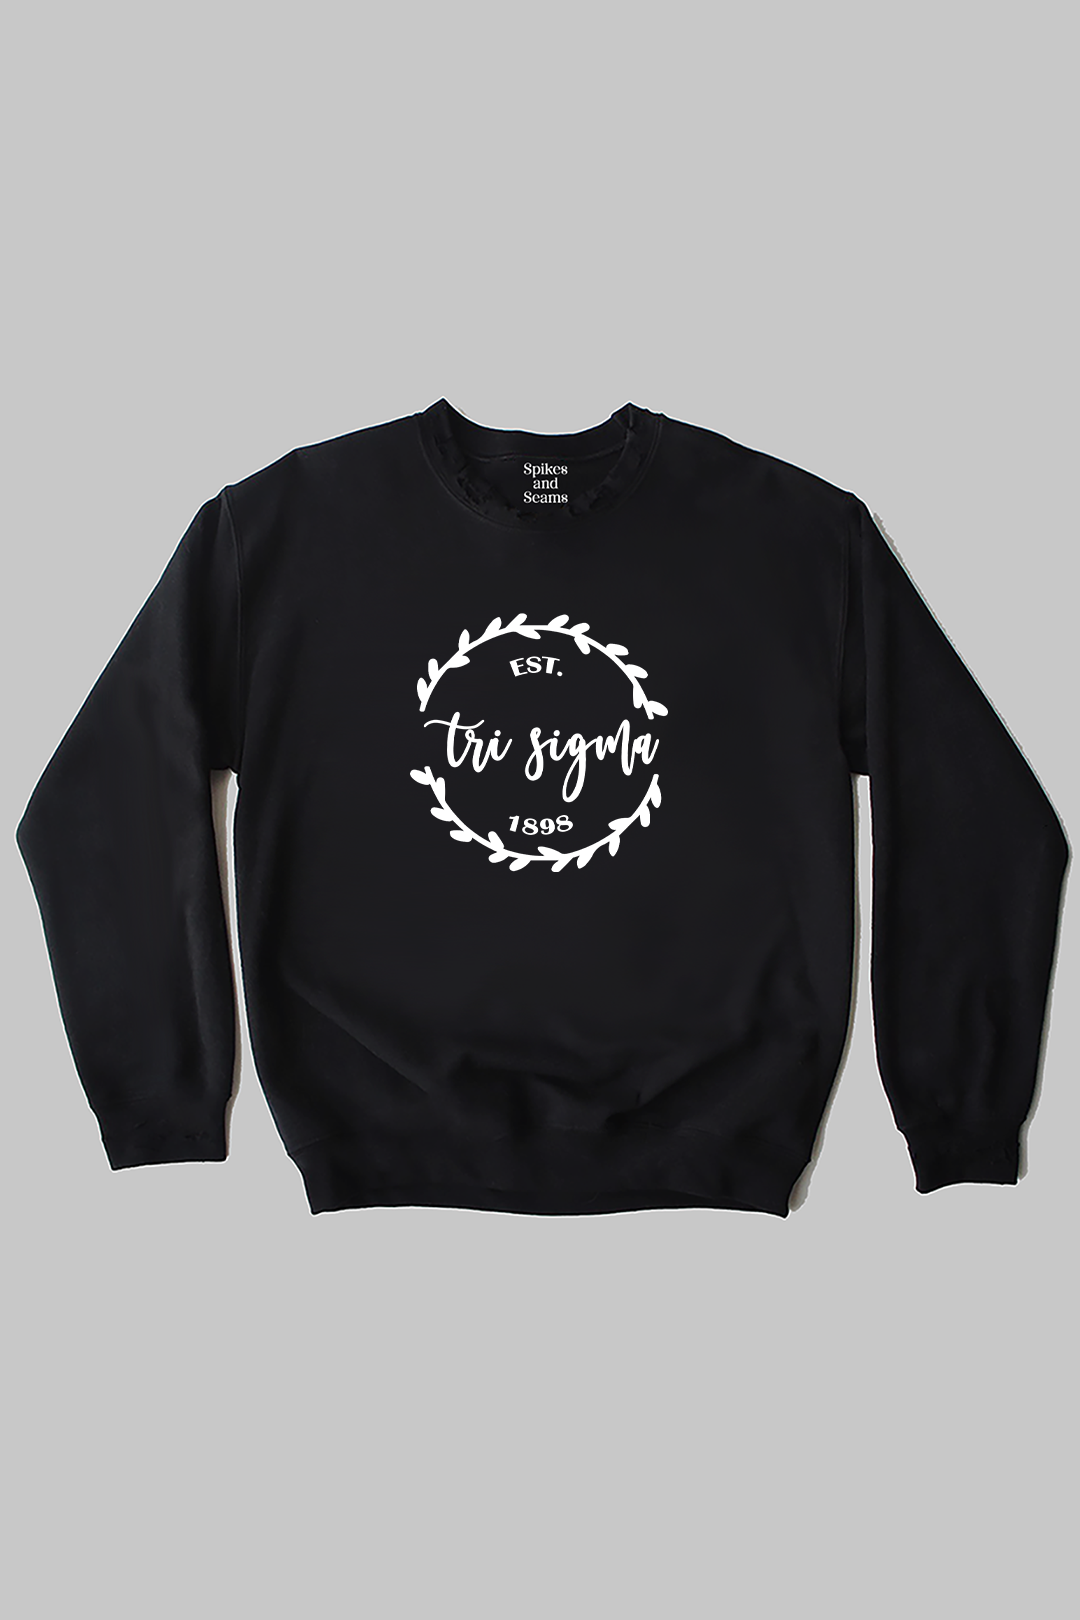 Wreath sweatshirt - Tri Sigma